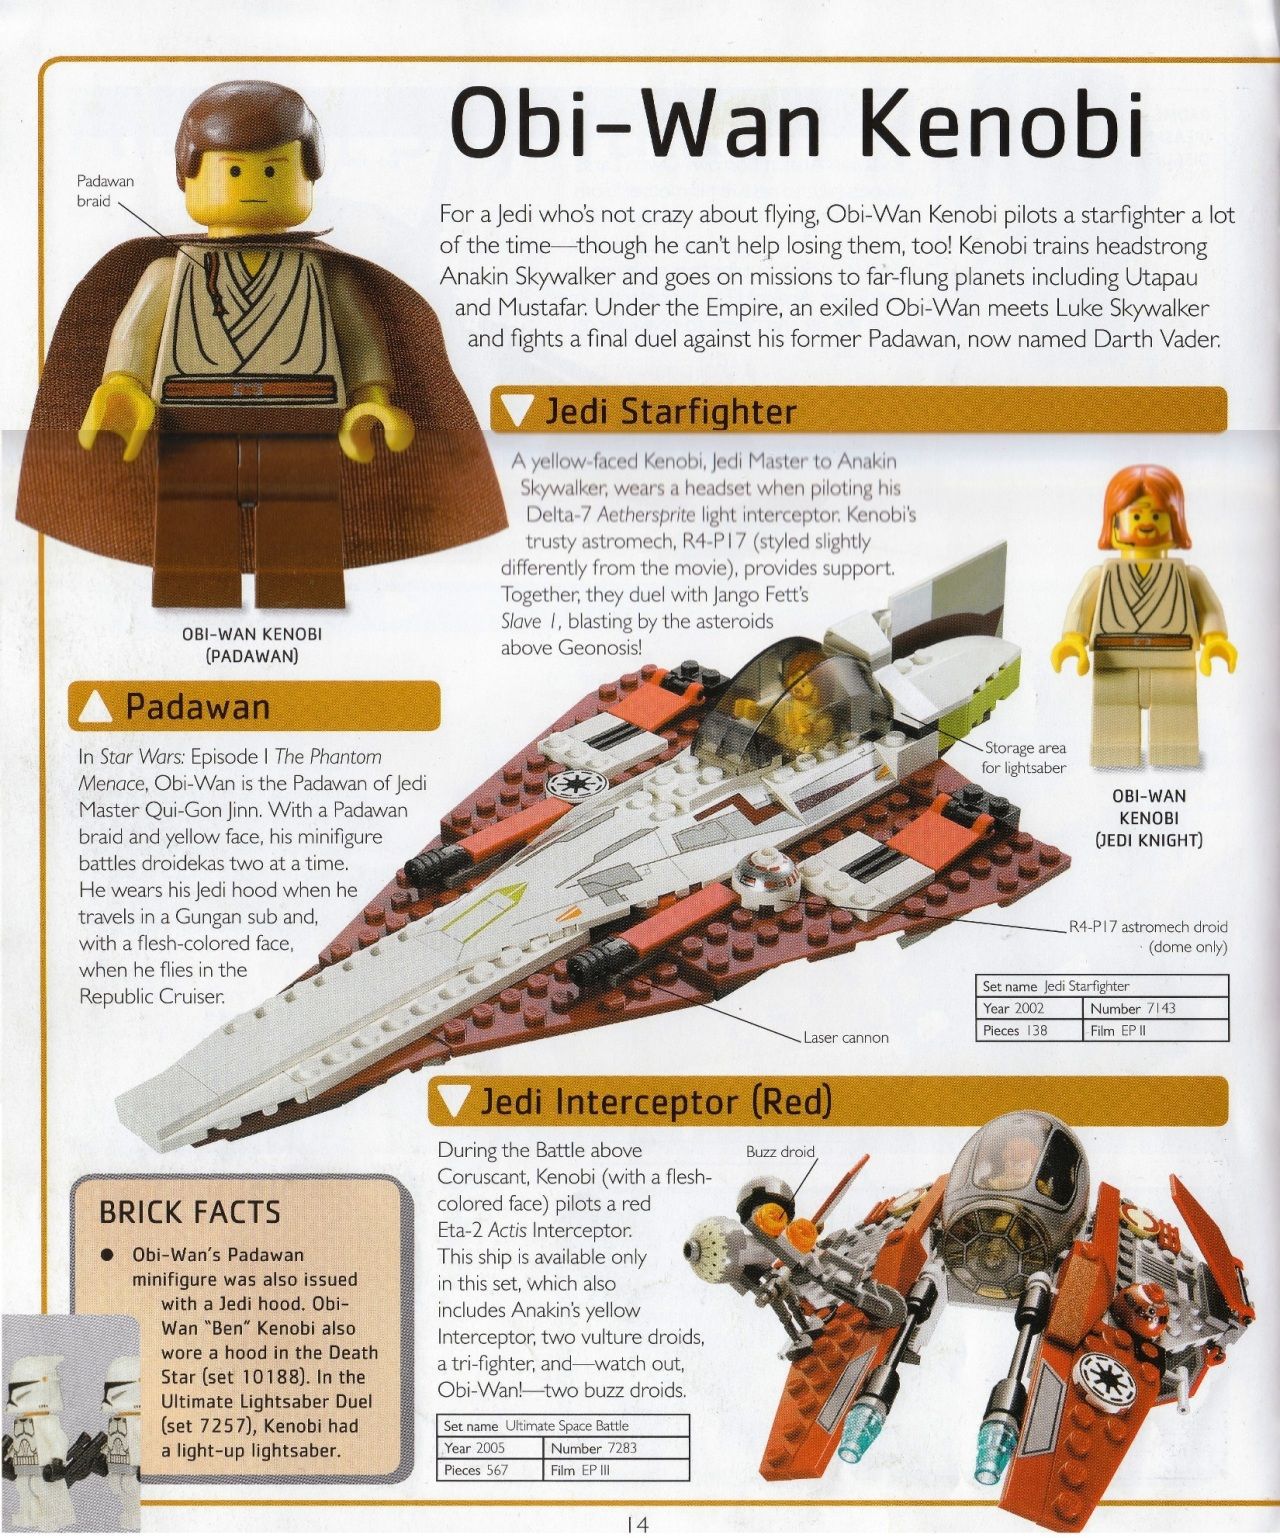 Lego Star Wars The Visual Dictionary 2009 Lego Star Wars The Visual Dictionary 2009 15